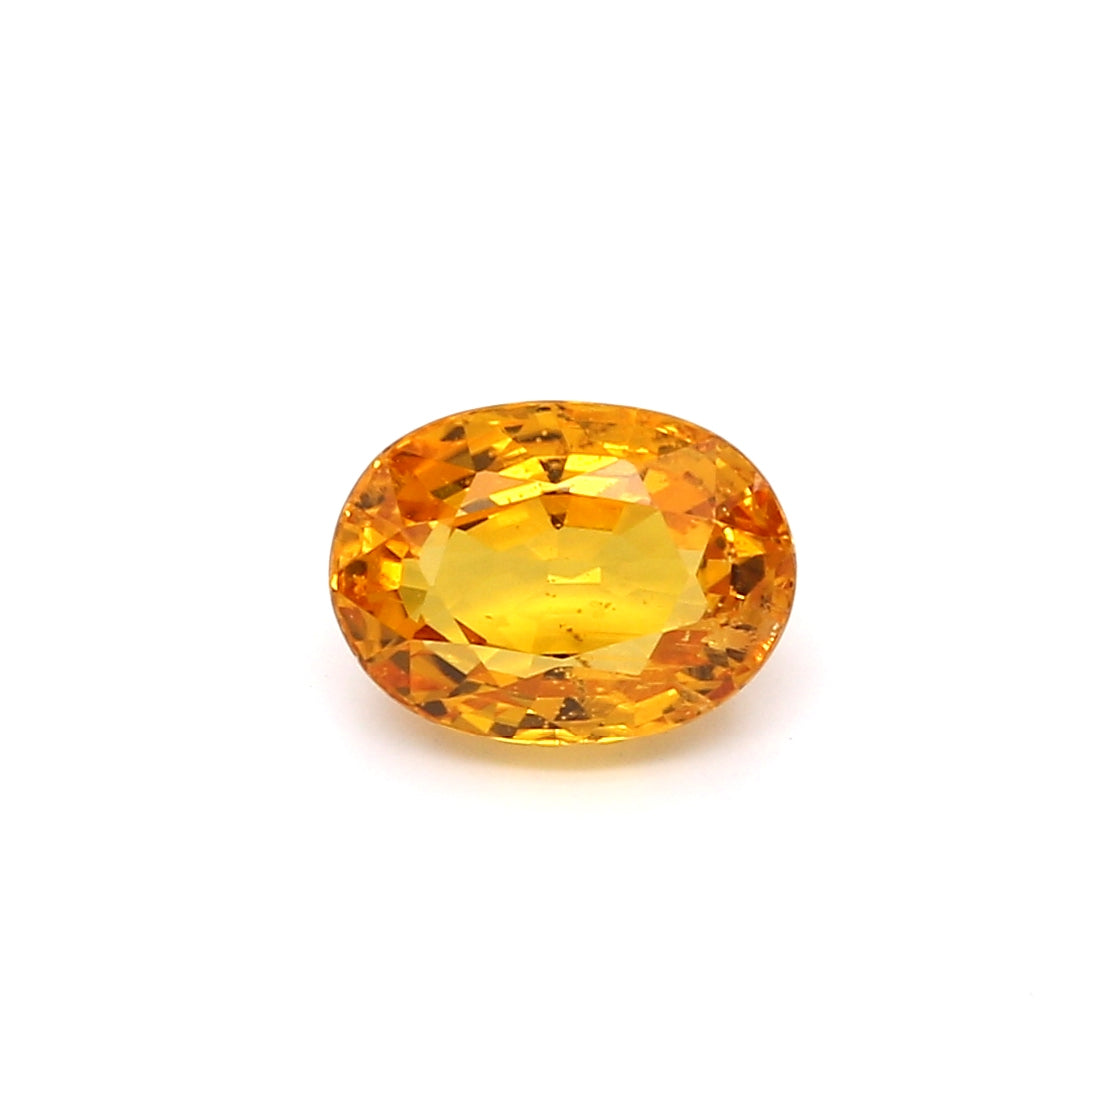 2.18ct Orangy Yellow, Oval Sapphire, Heated, Sri Lanka - 8.22 x 6.10 x 4.43mm